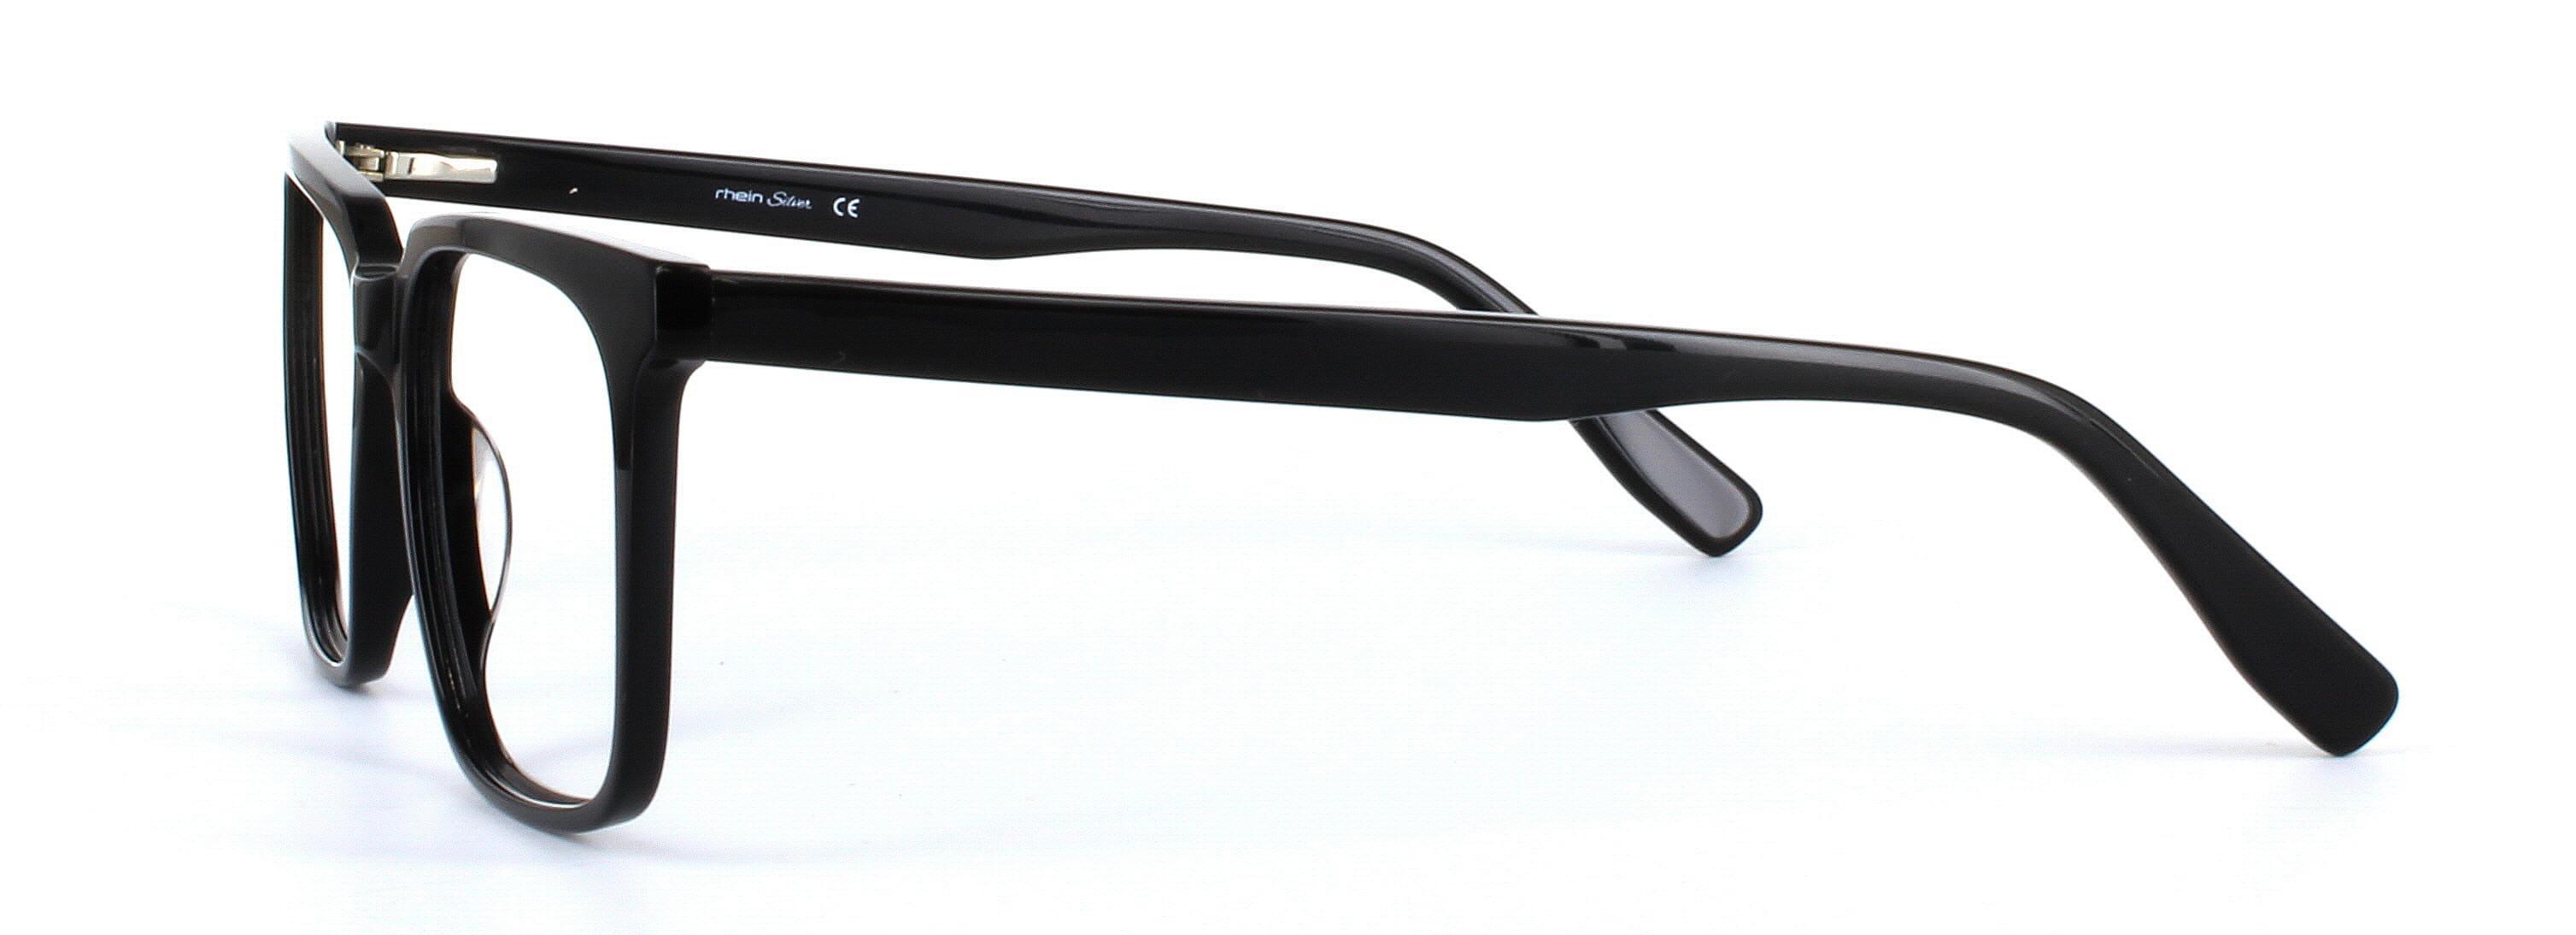 Coombe Black Full Rim Rectangular Acetate Glasses - Image View 2